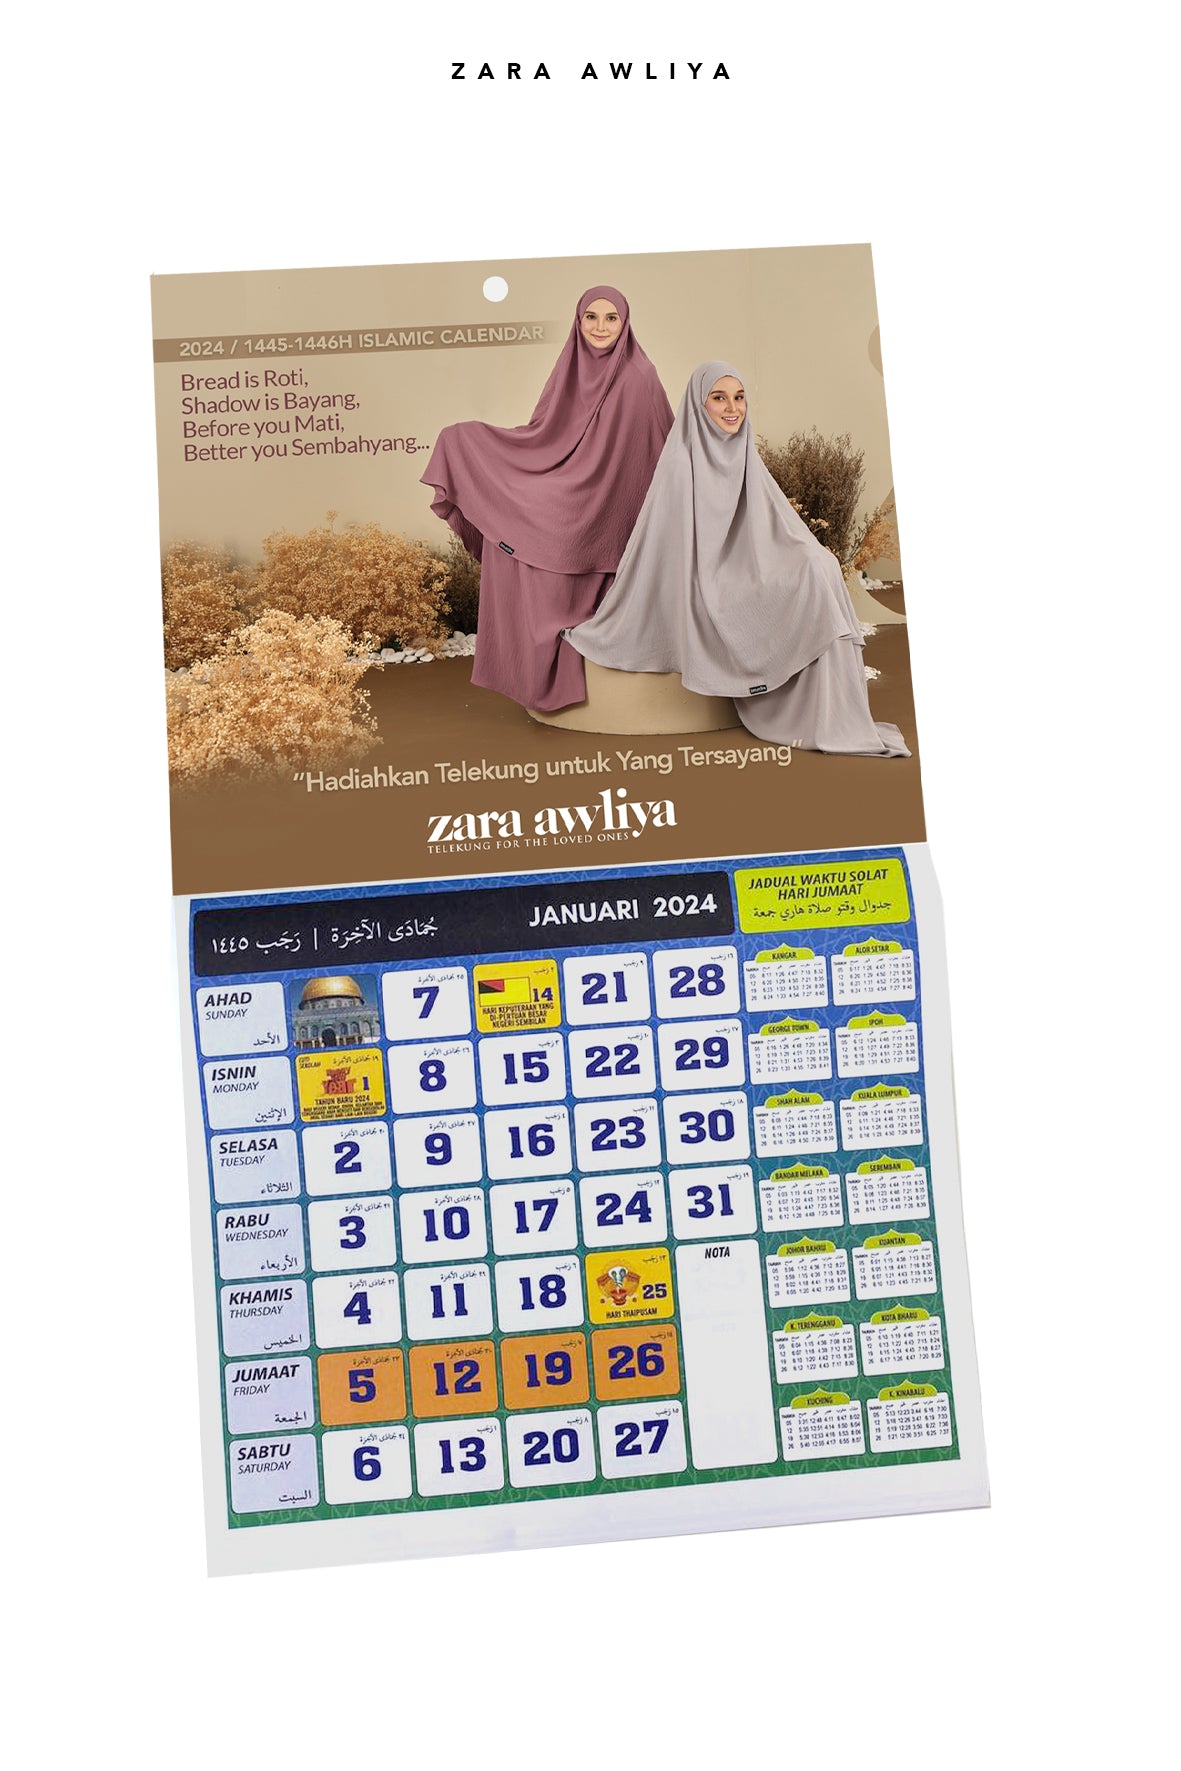 2024 Islamic Wall Calendar with Solat Time